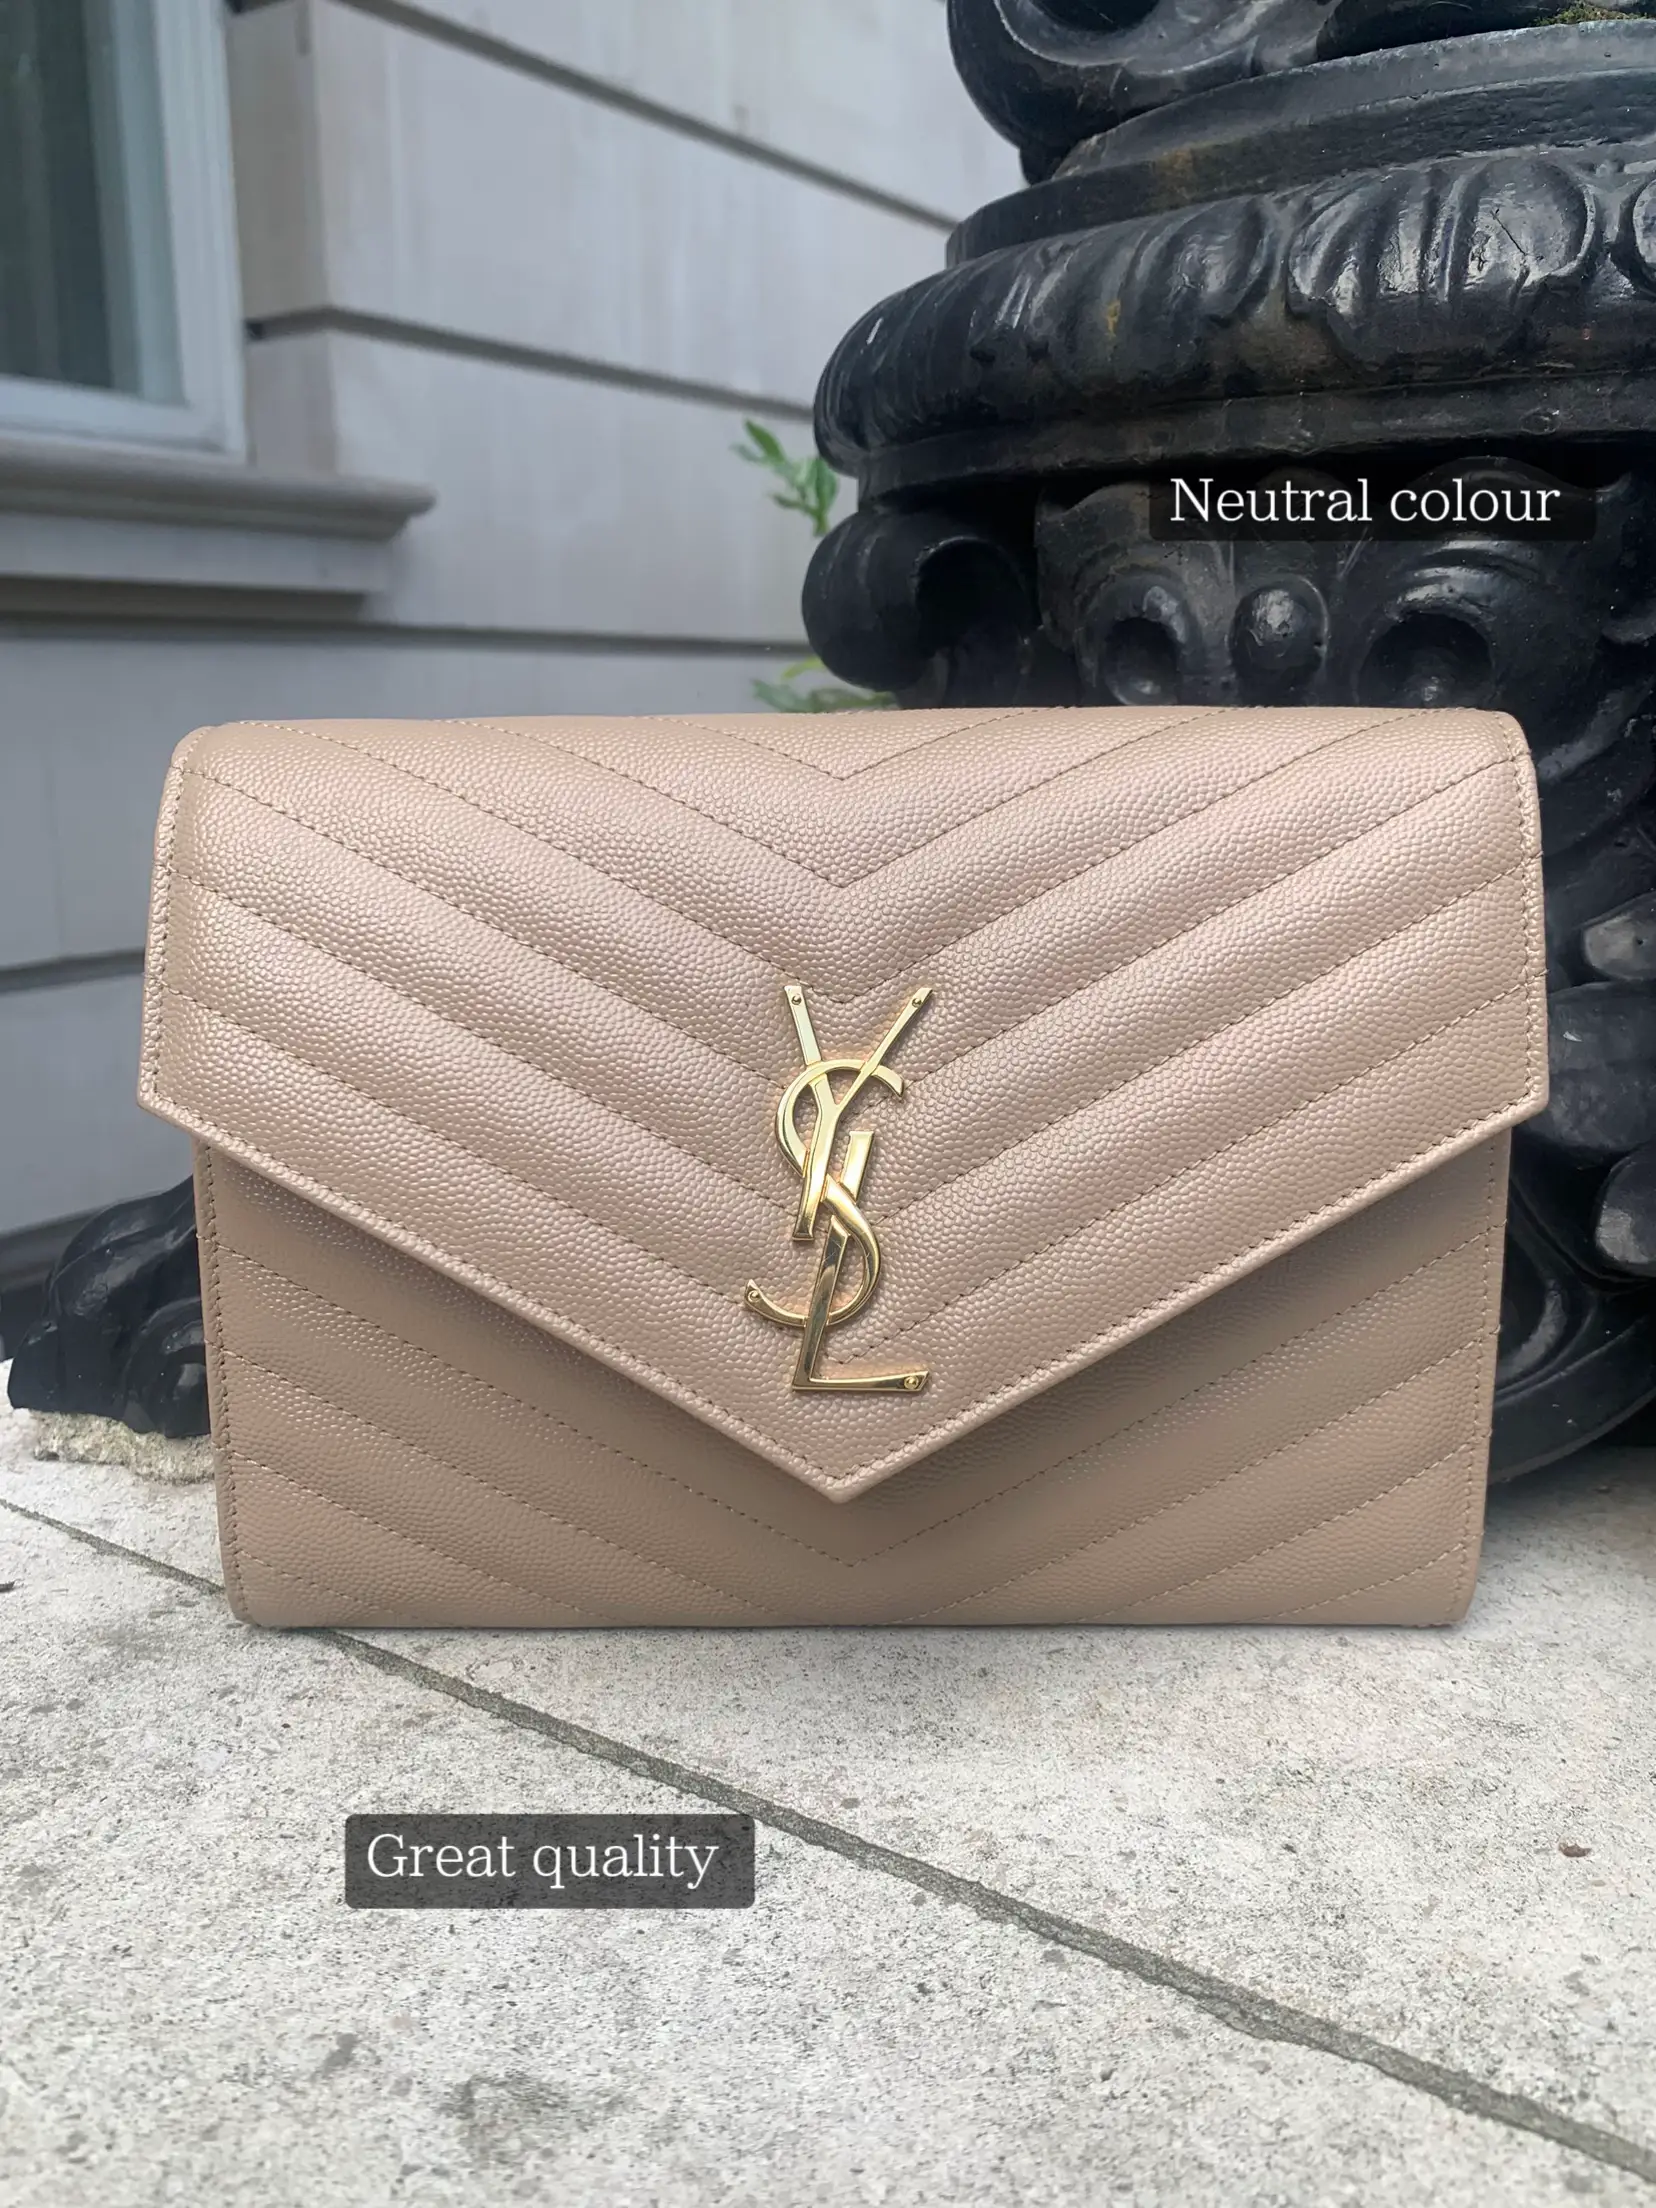 Chanel Classic Flap Beige - Designer WishBags